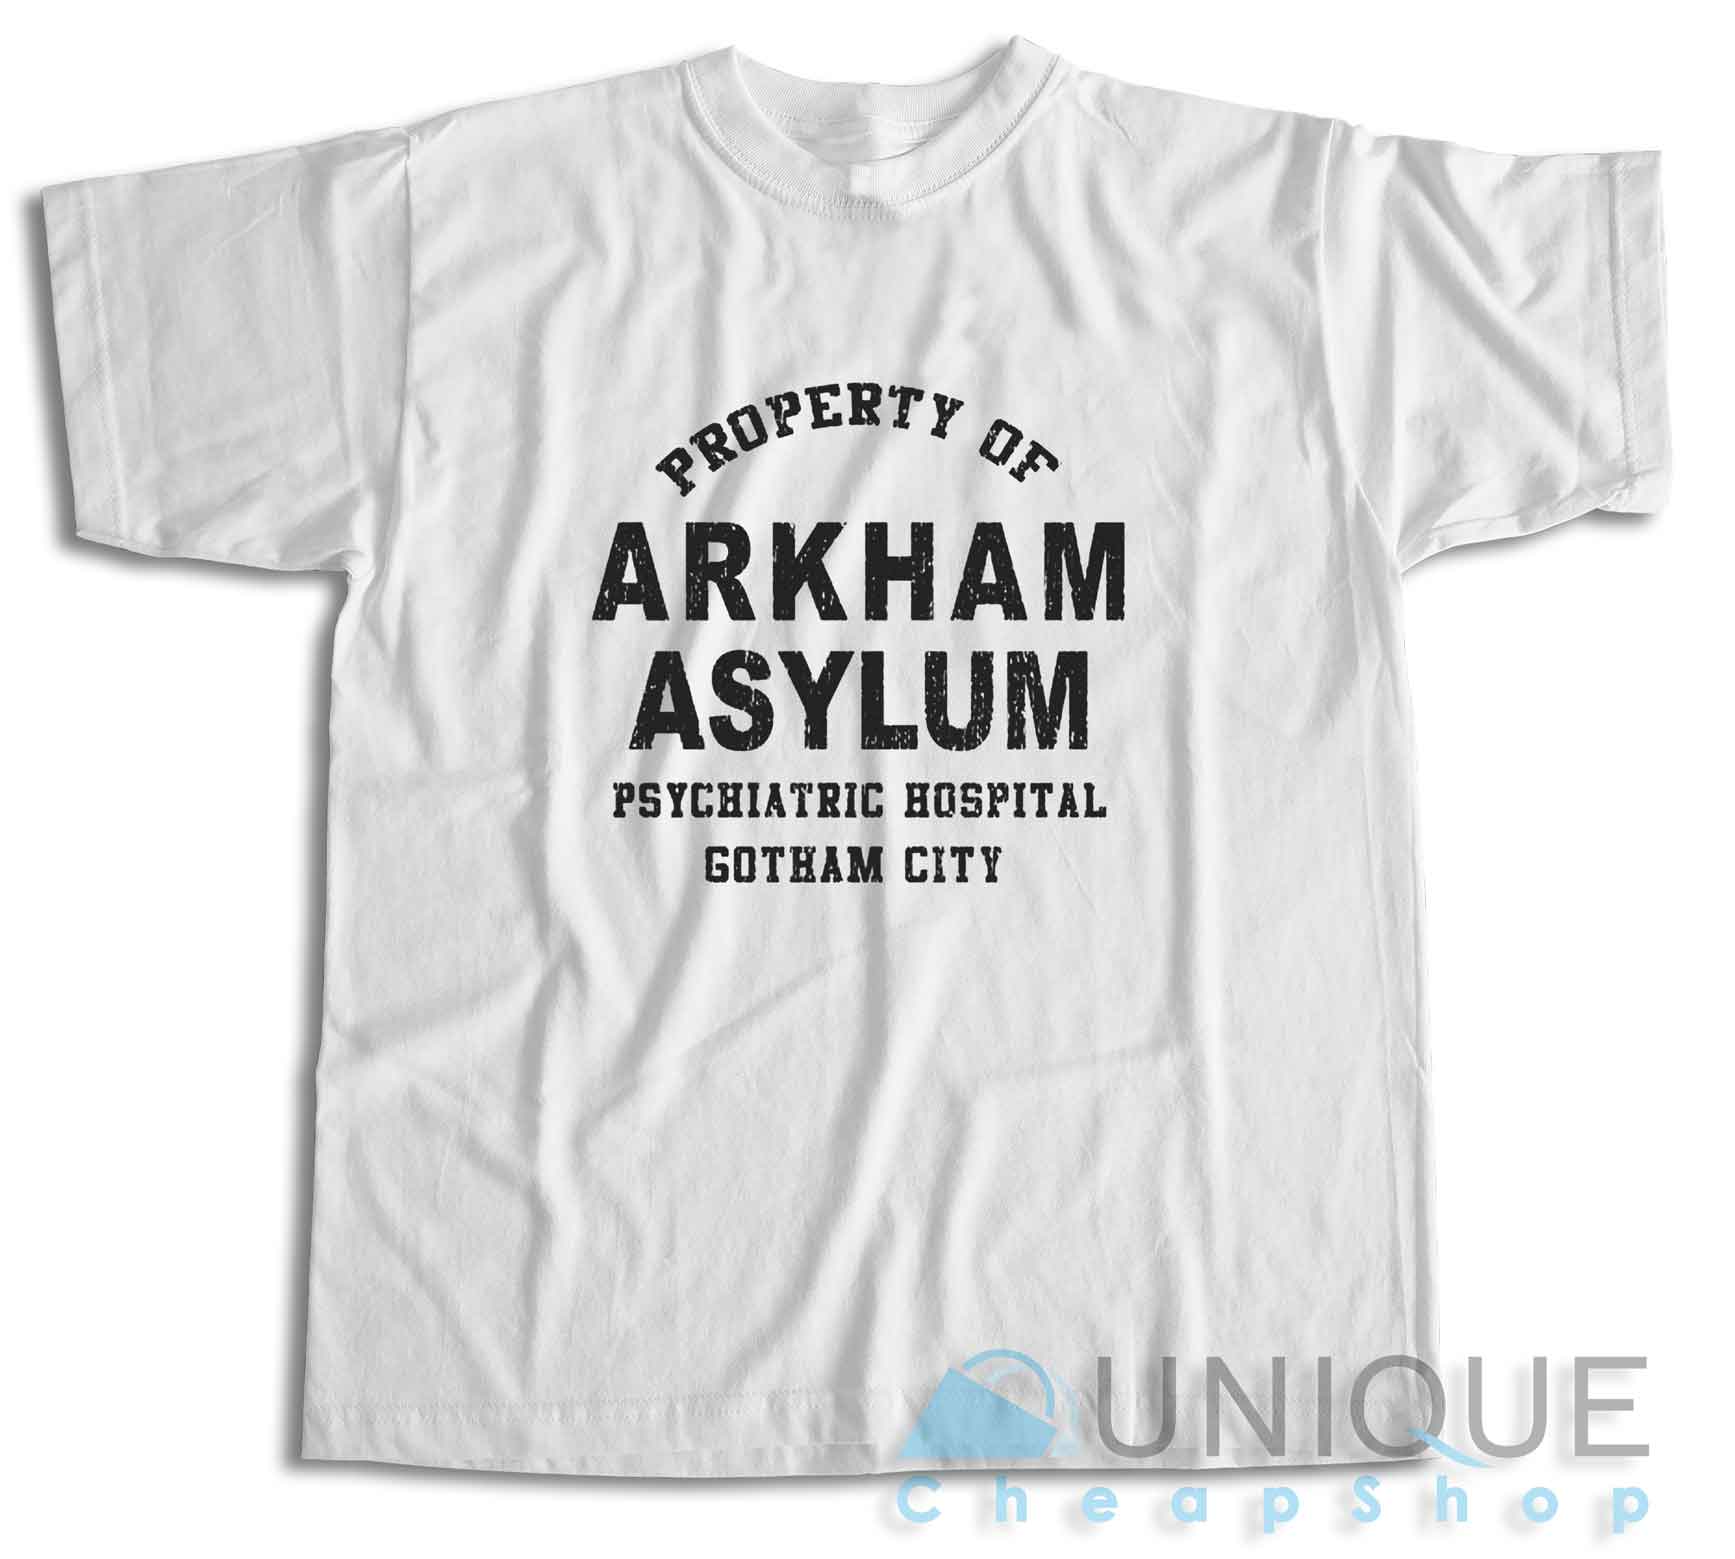 Arkham Asylum T-Shirt Color White